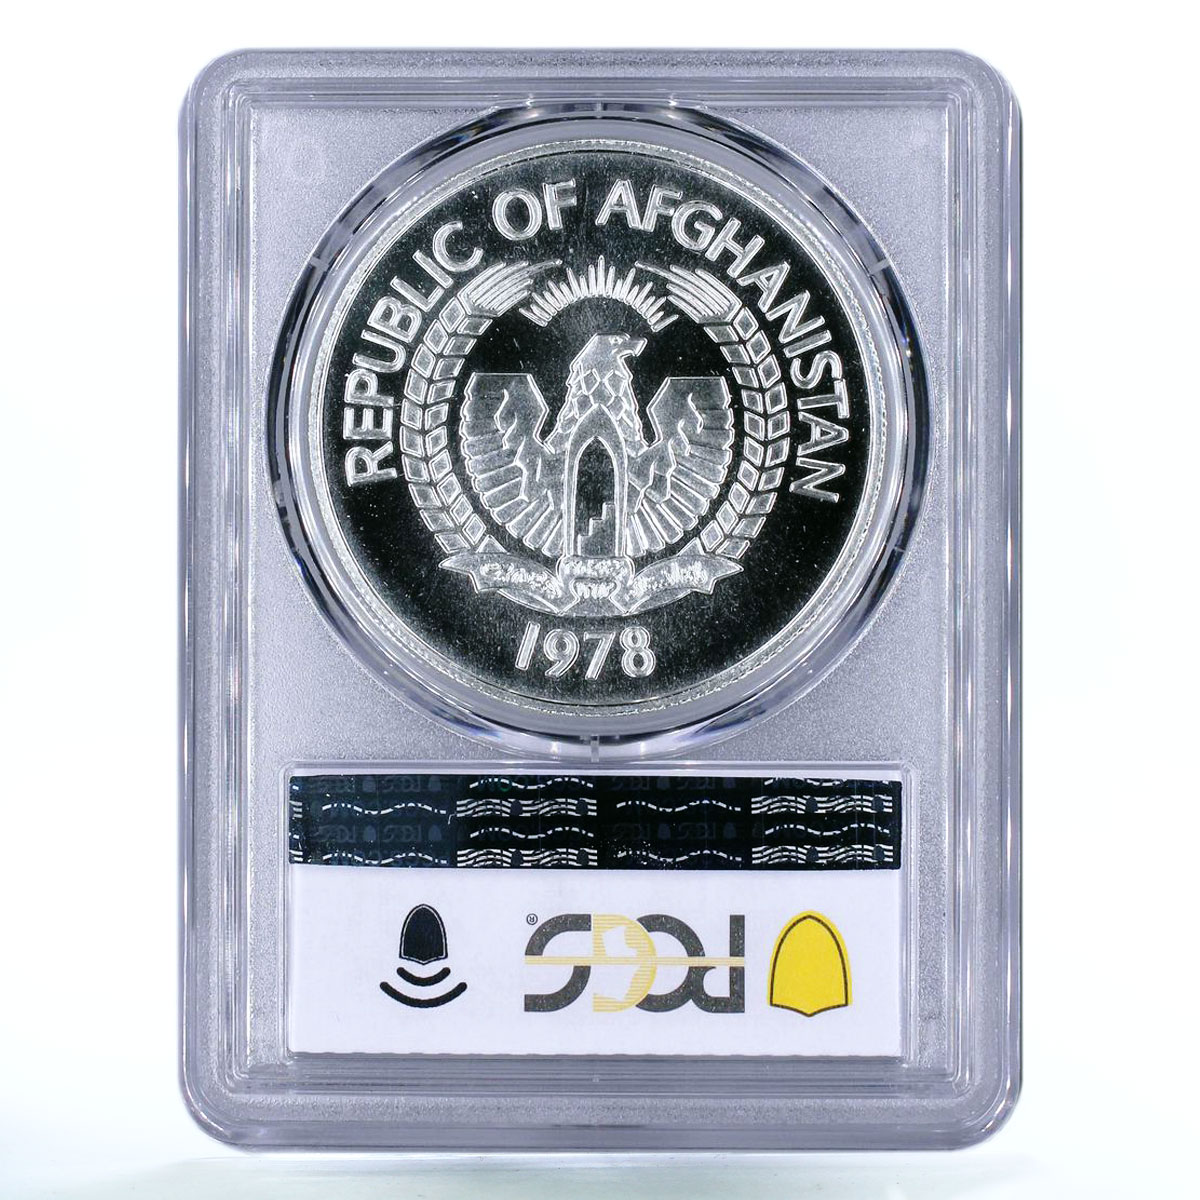 Afghanistan 500 afghanis Endangered Wildlife Crane Bird MS69 PCGS Ag coin 1978